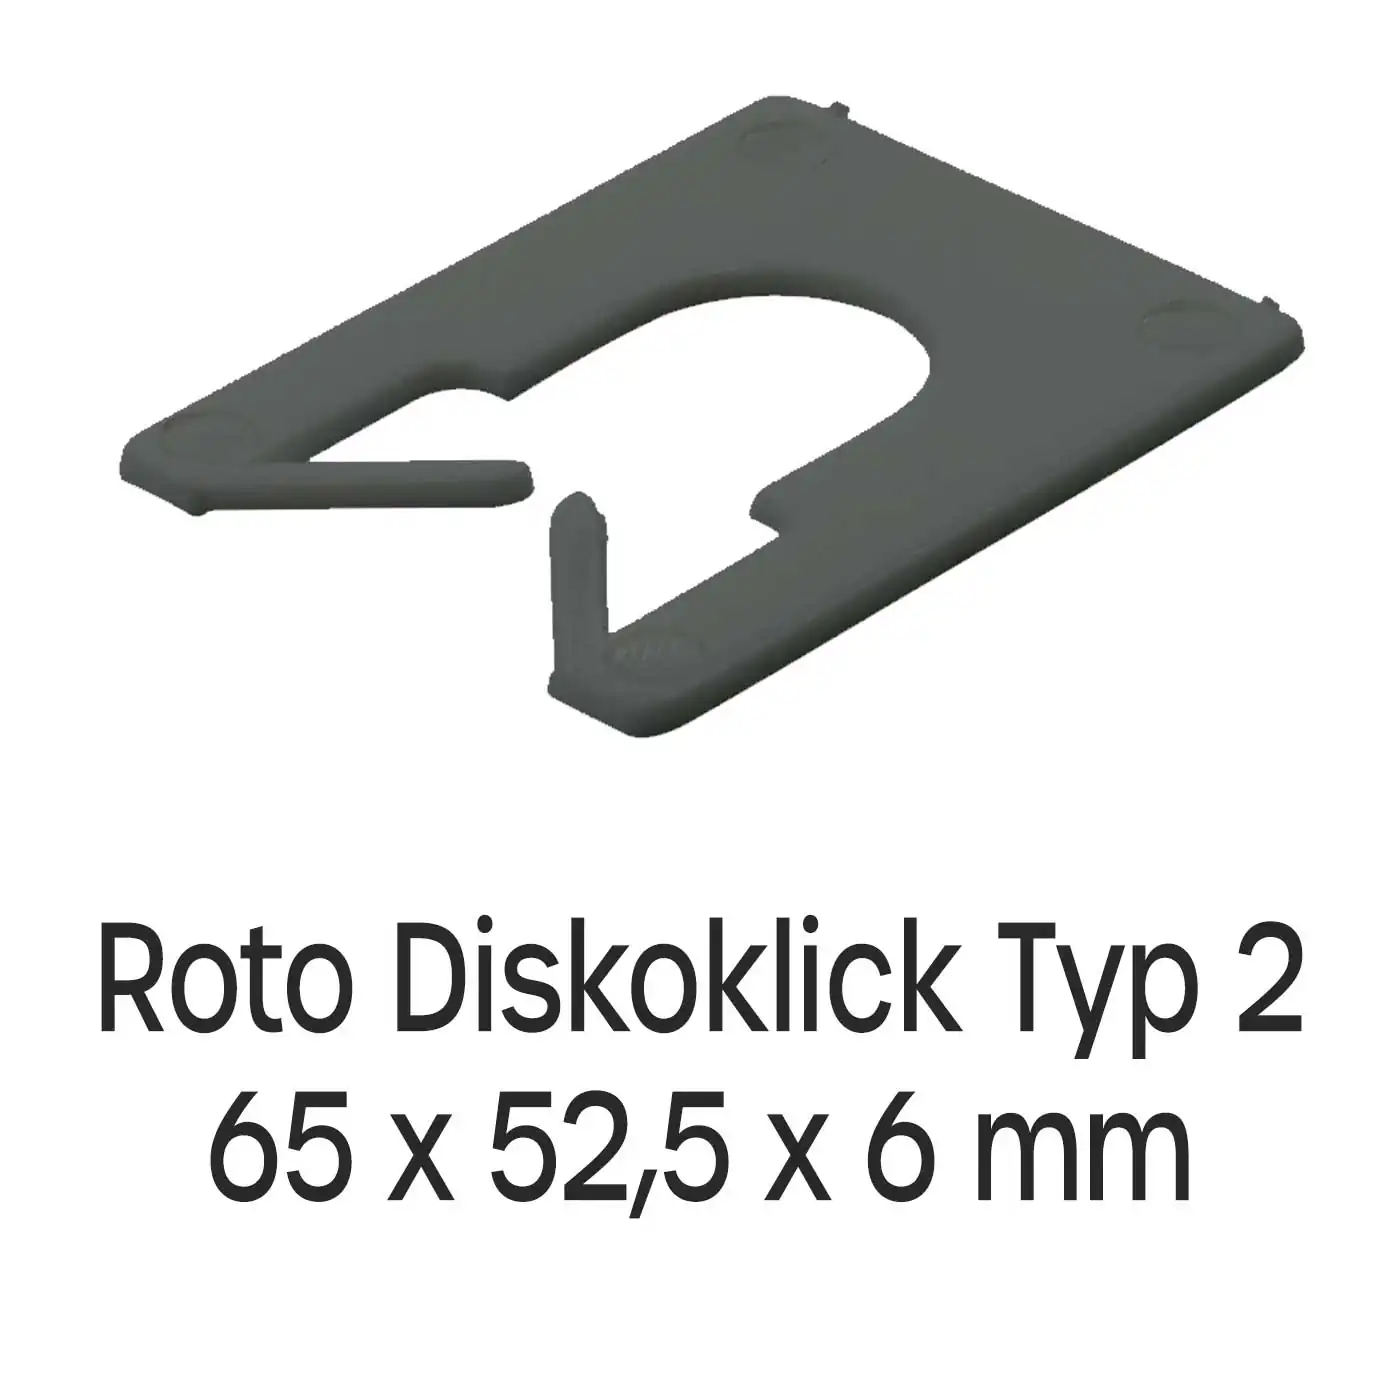 Distanzplatten Roto Diskoklick Typ 2 65 x 52,5 x 6 mm 500 Stück